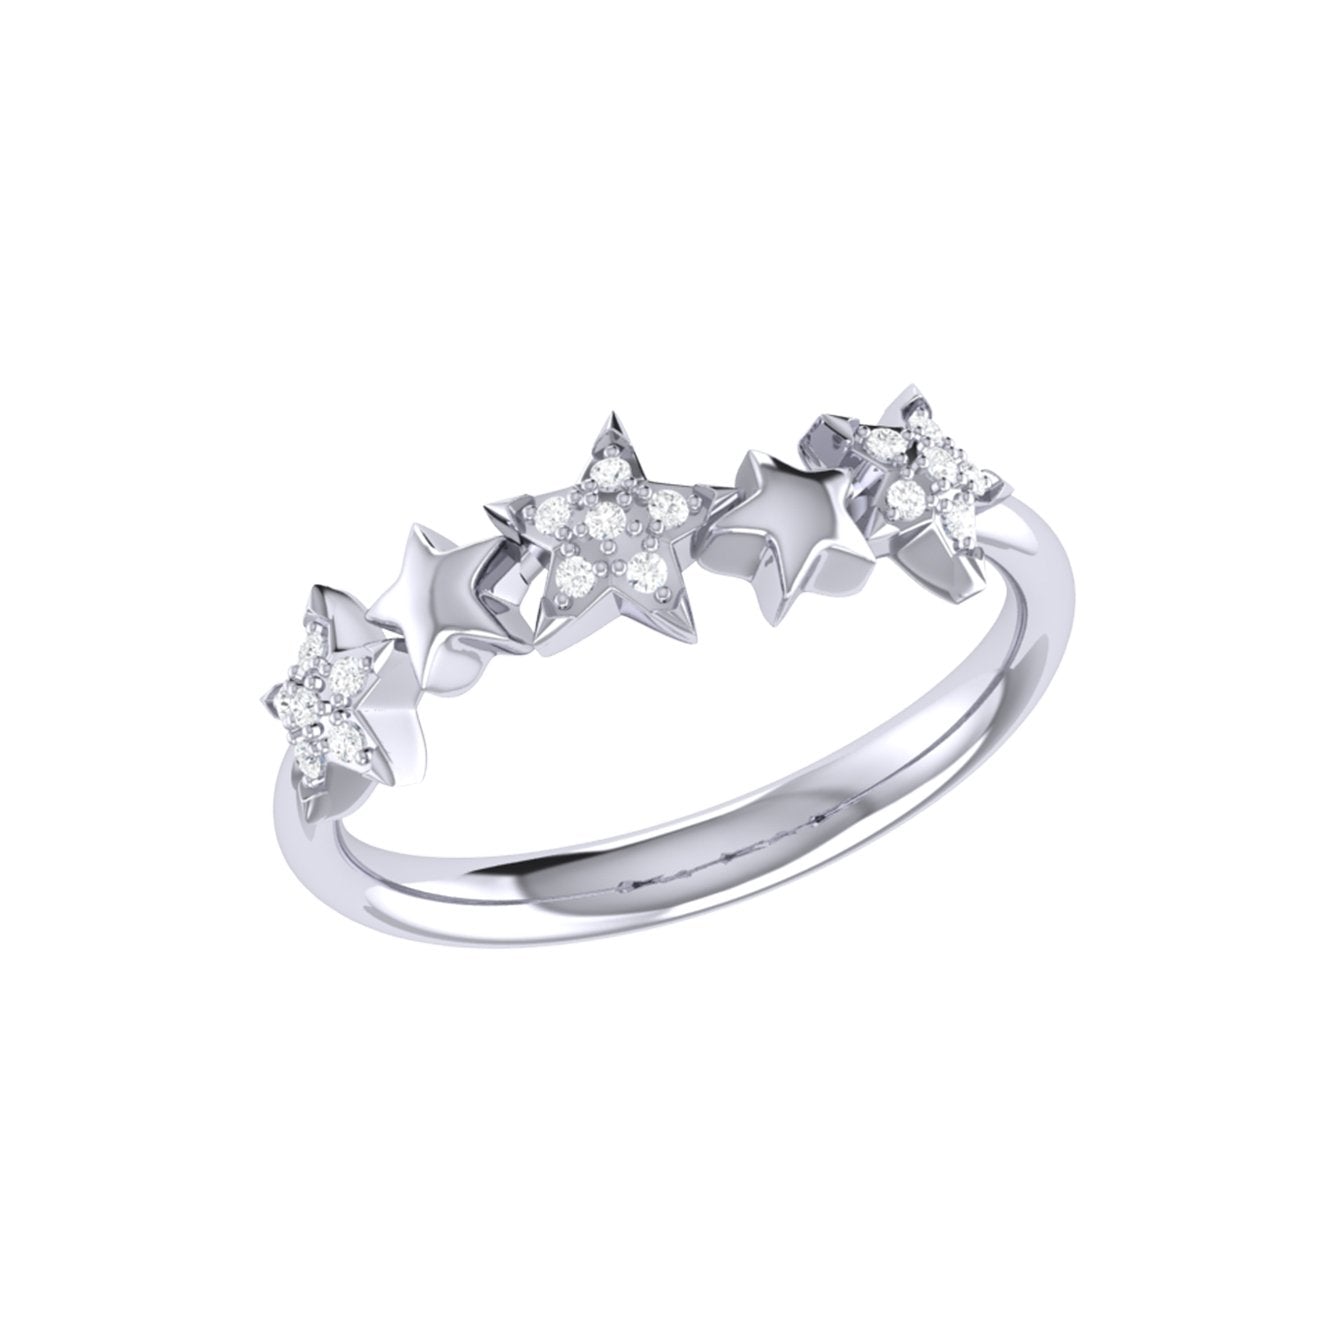 Sparkling Starry Lane Diamond Ring in 14K White Gold - Jewelry & Watches - Bijou Her -  -  - 